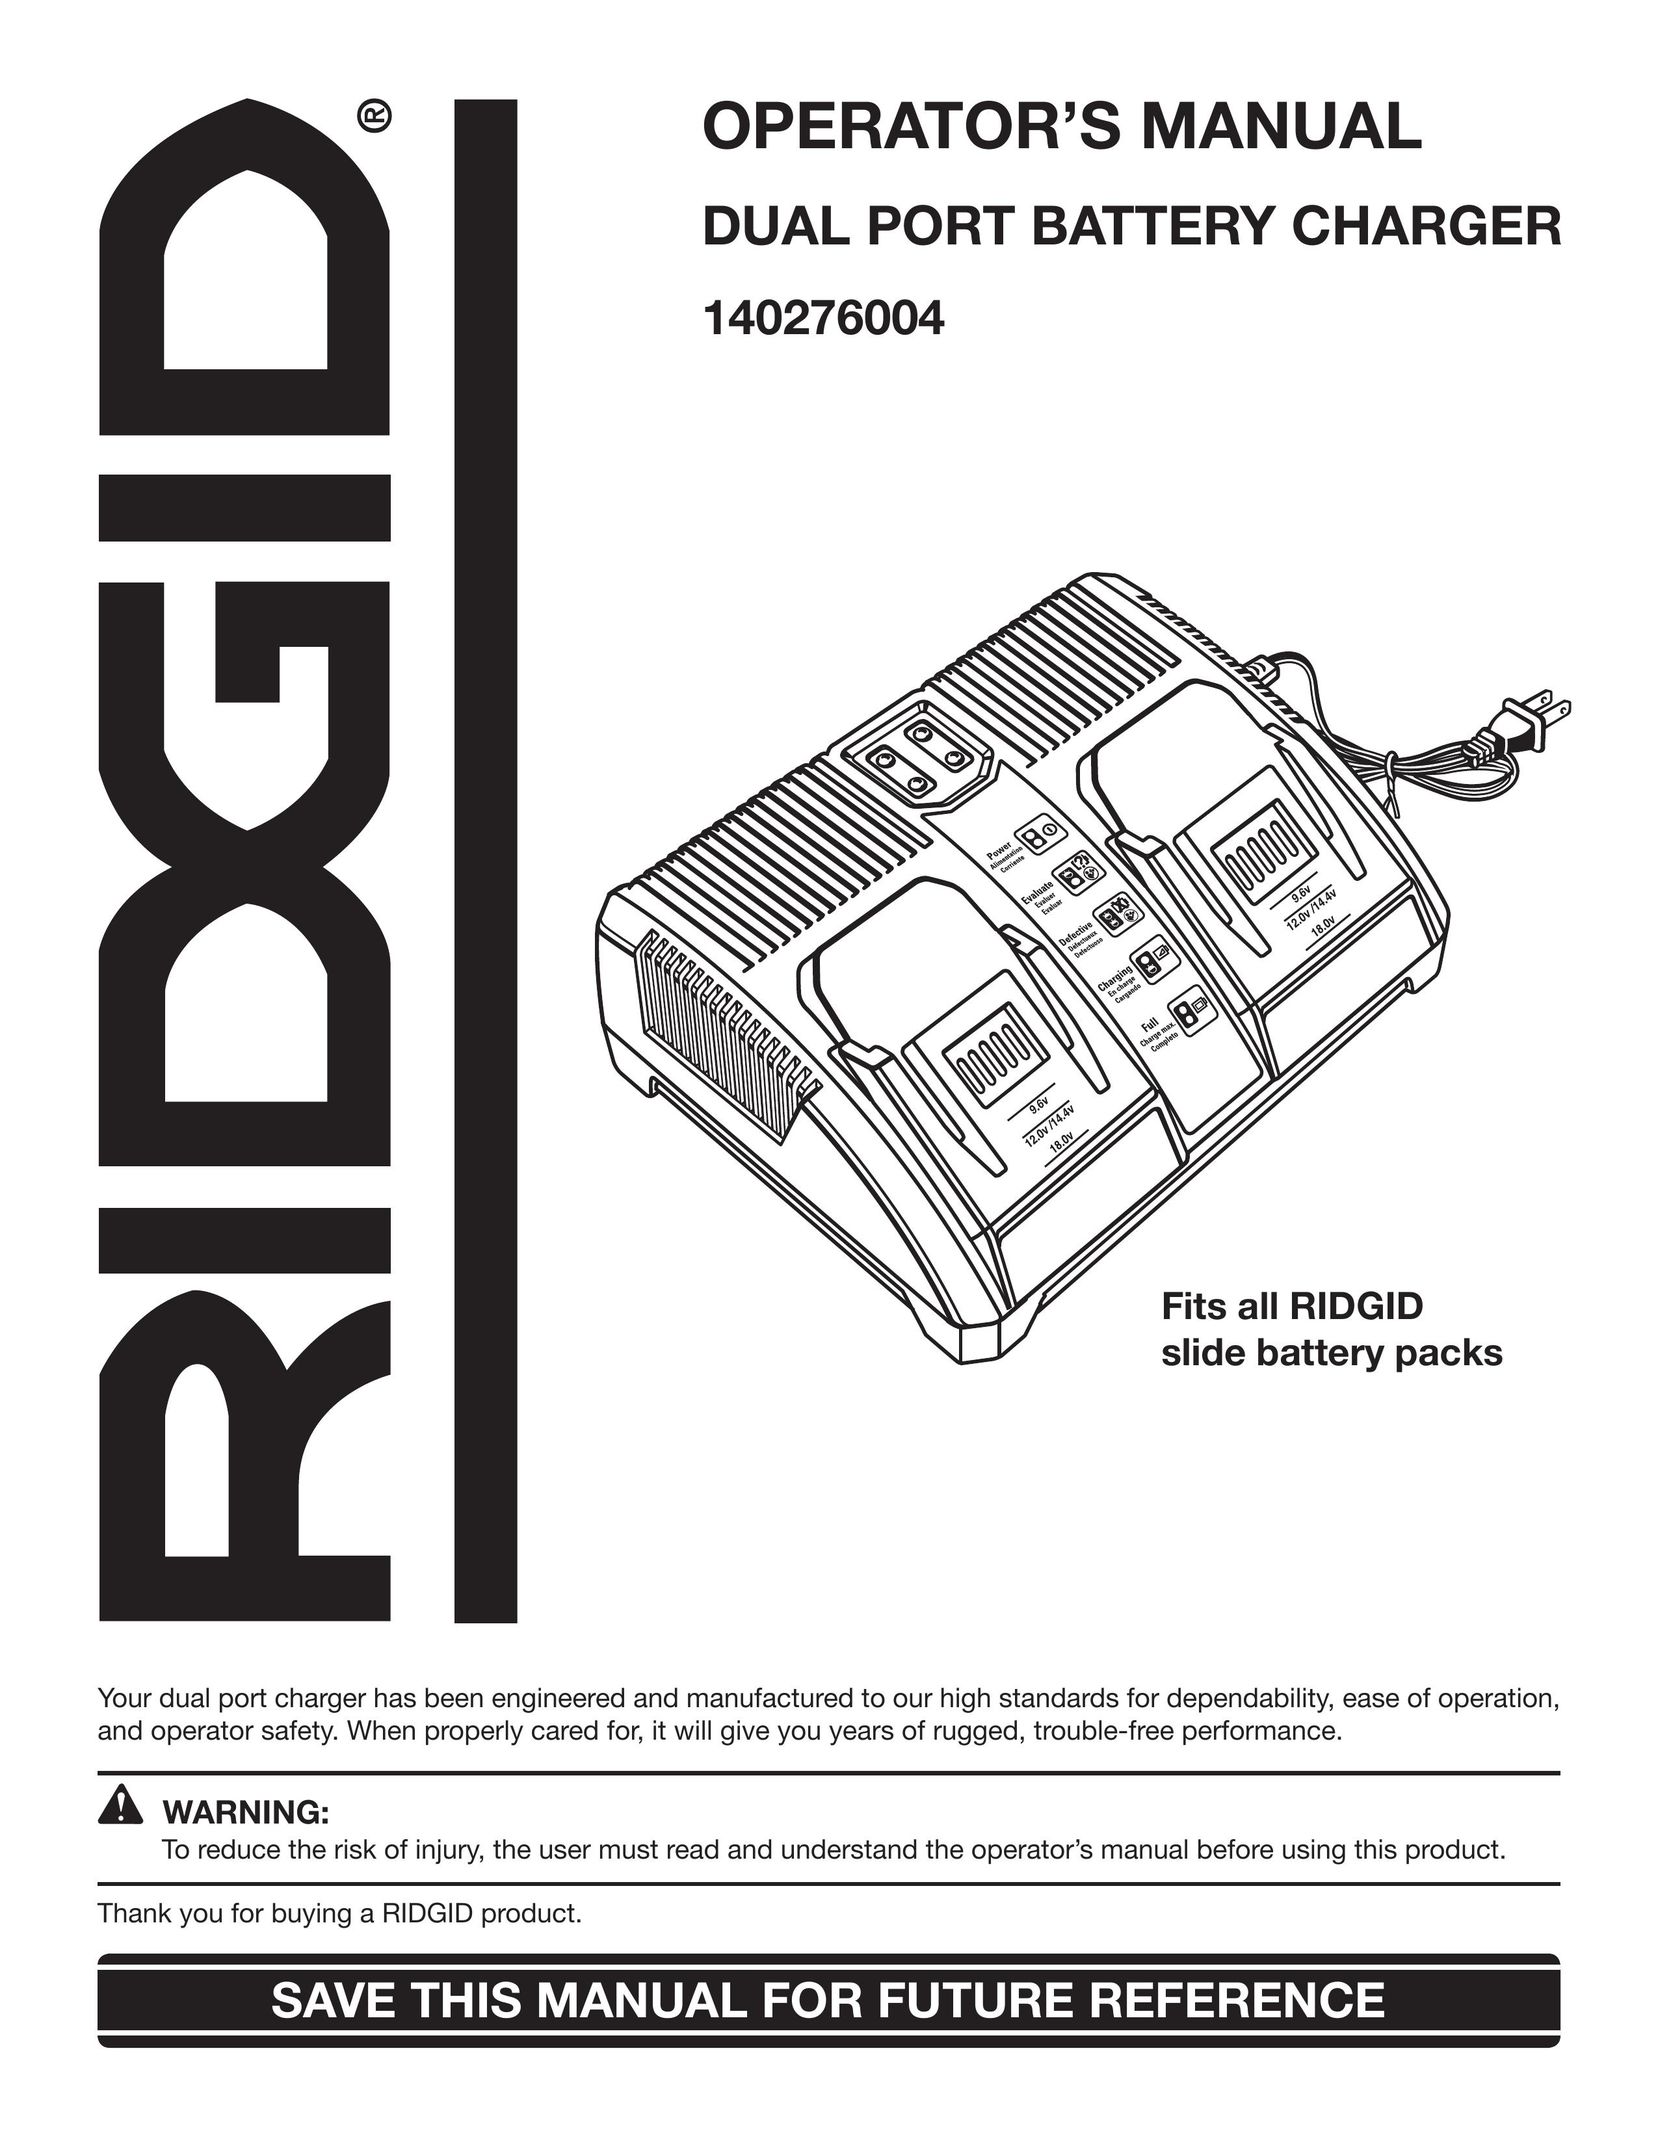 RIDGID 140276004 Battery Charger User Manual